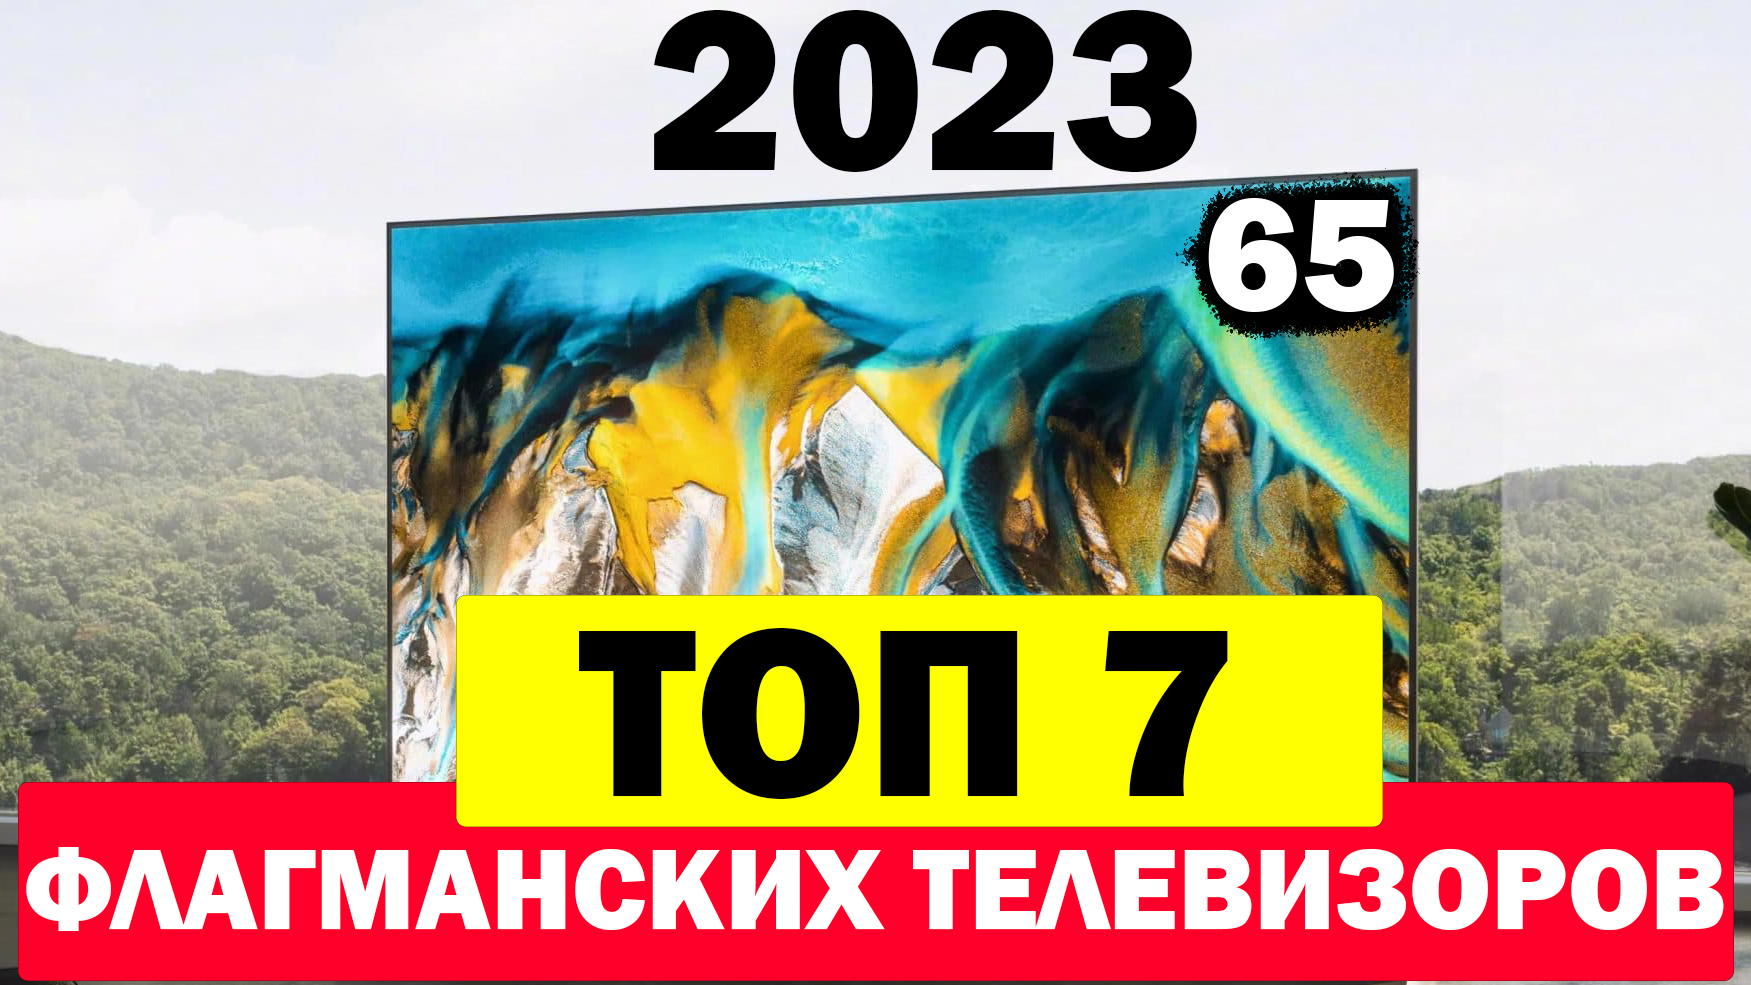 Топ телевизор 2023 года. Телевизор 2023. Hisense TV 2023. Фирма телевизоров 2023. Топ 10 телевизоров 2023 цена качество.